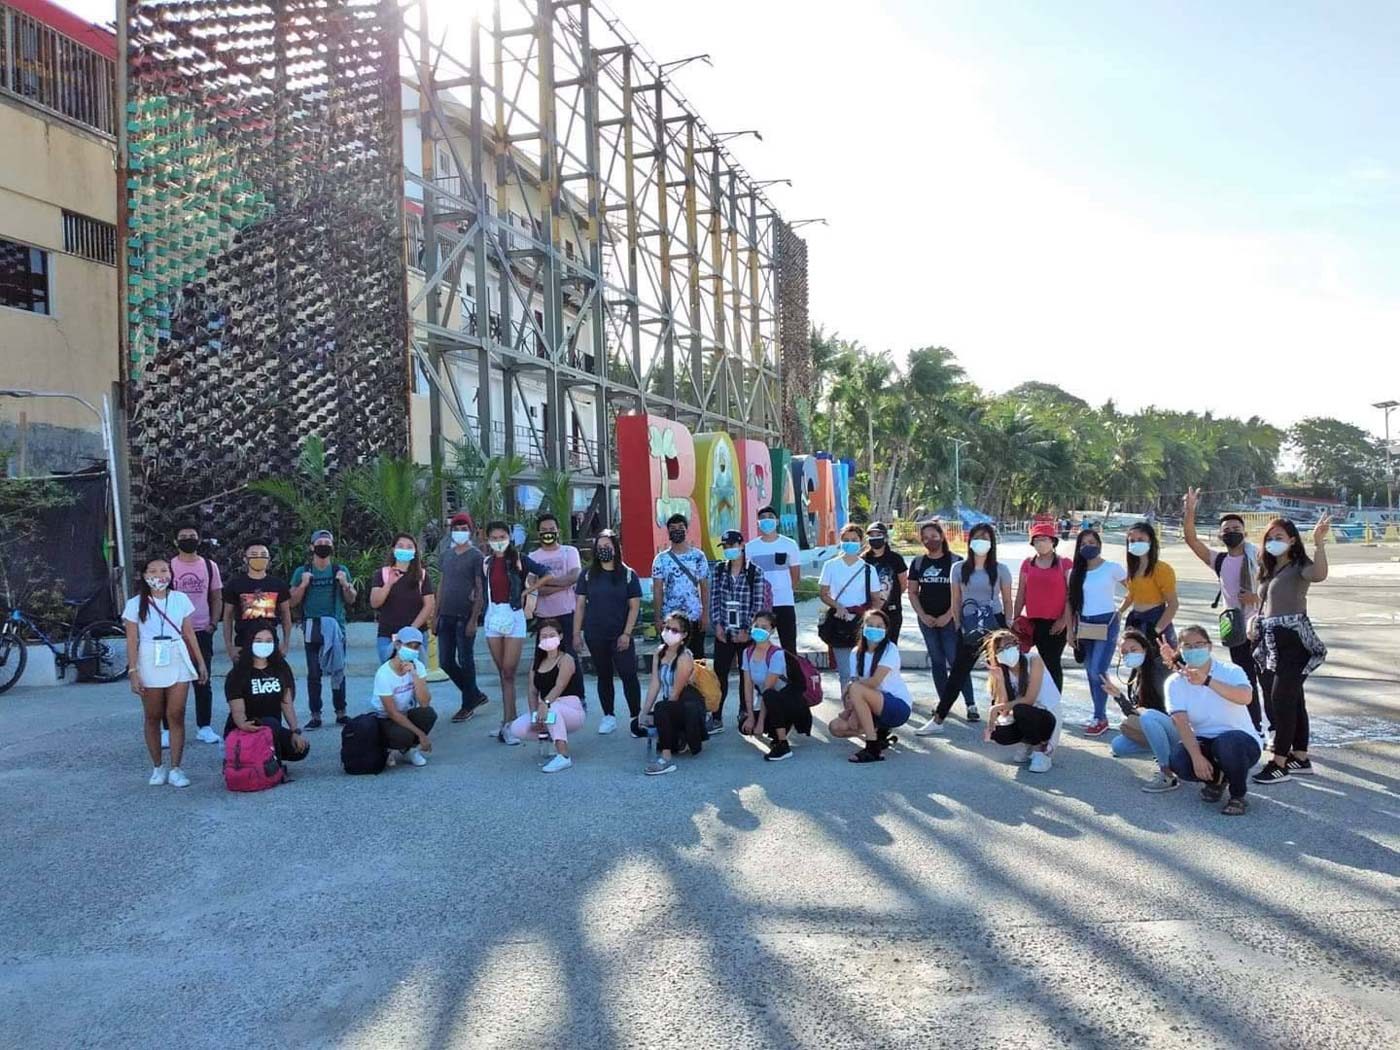 19 VisMin students stranded in Boracay, awaiting flights back home